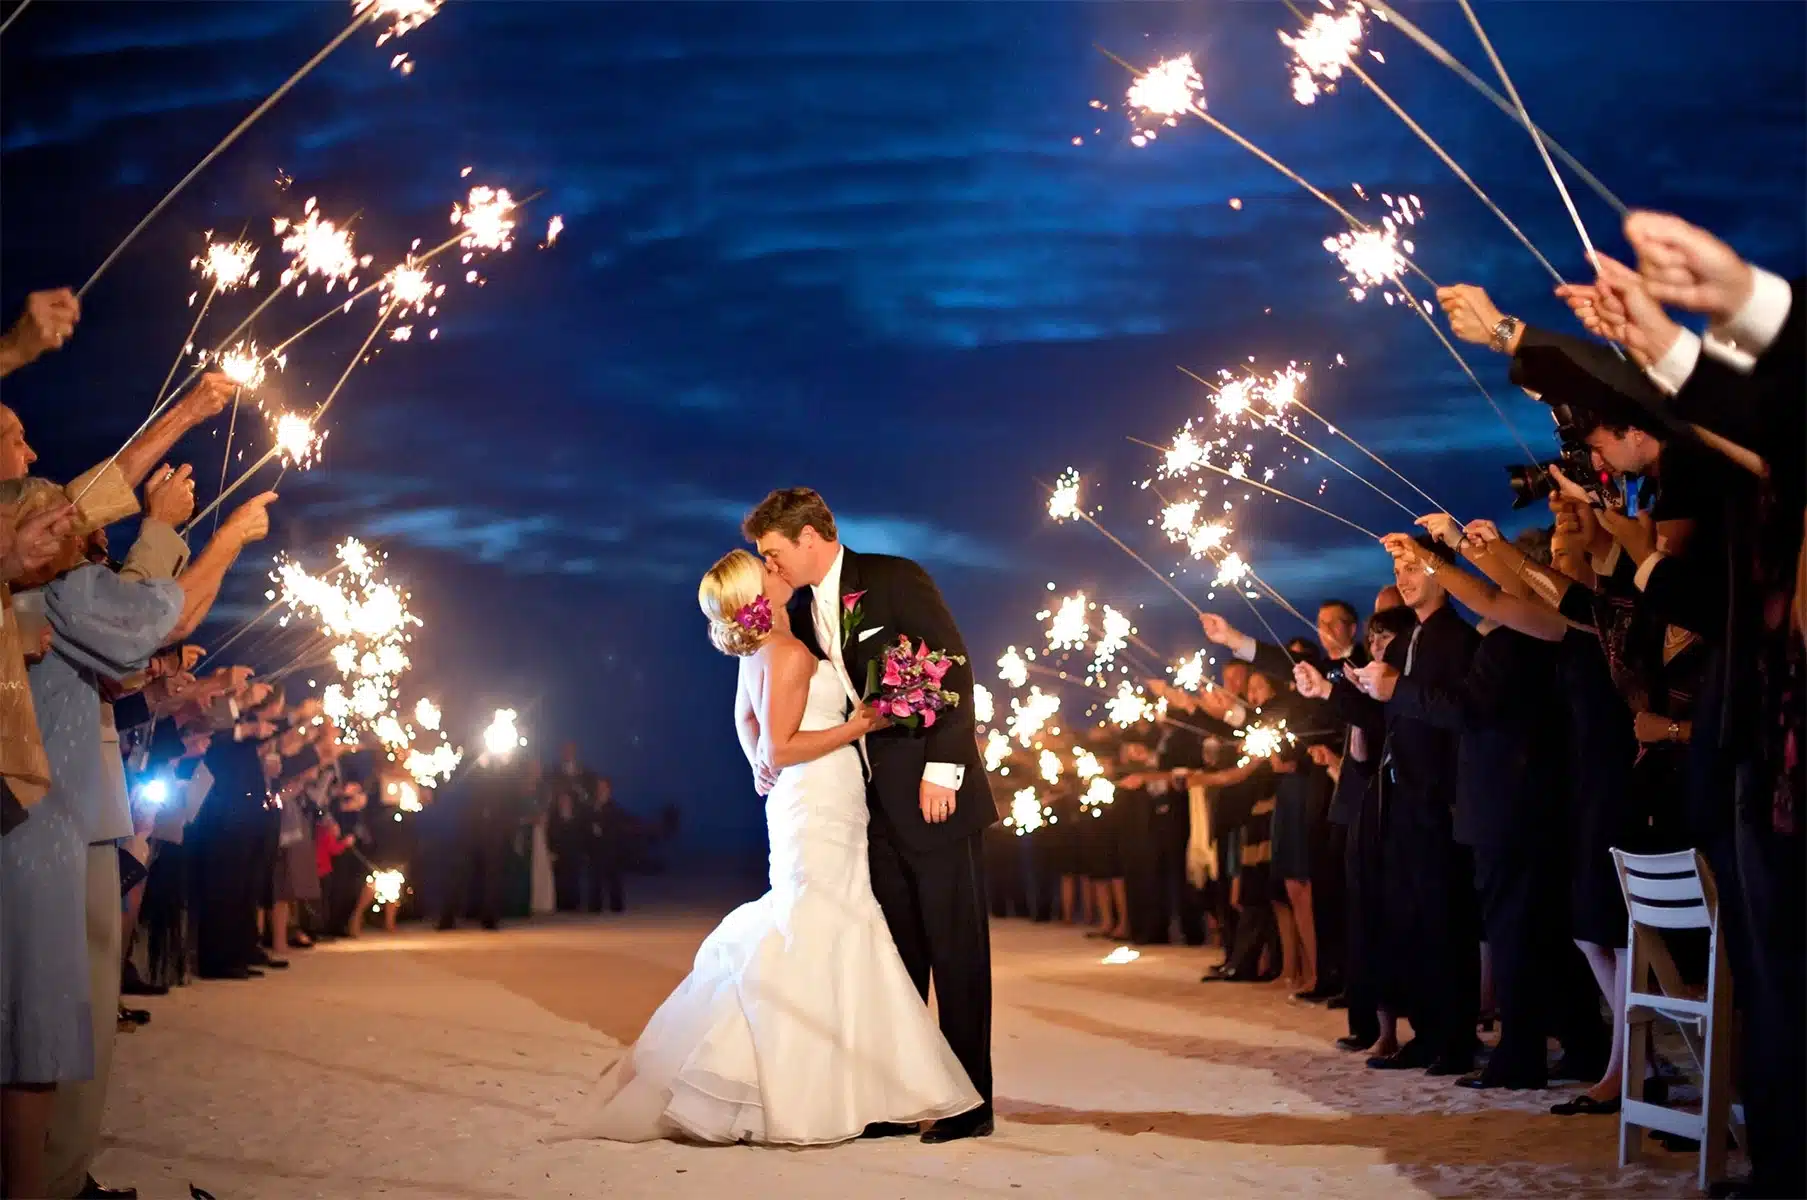 Wedding party ideas sparklers walk